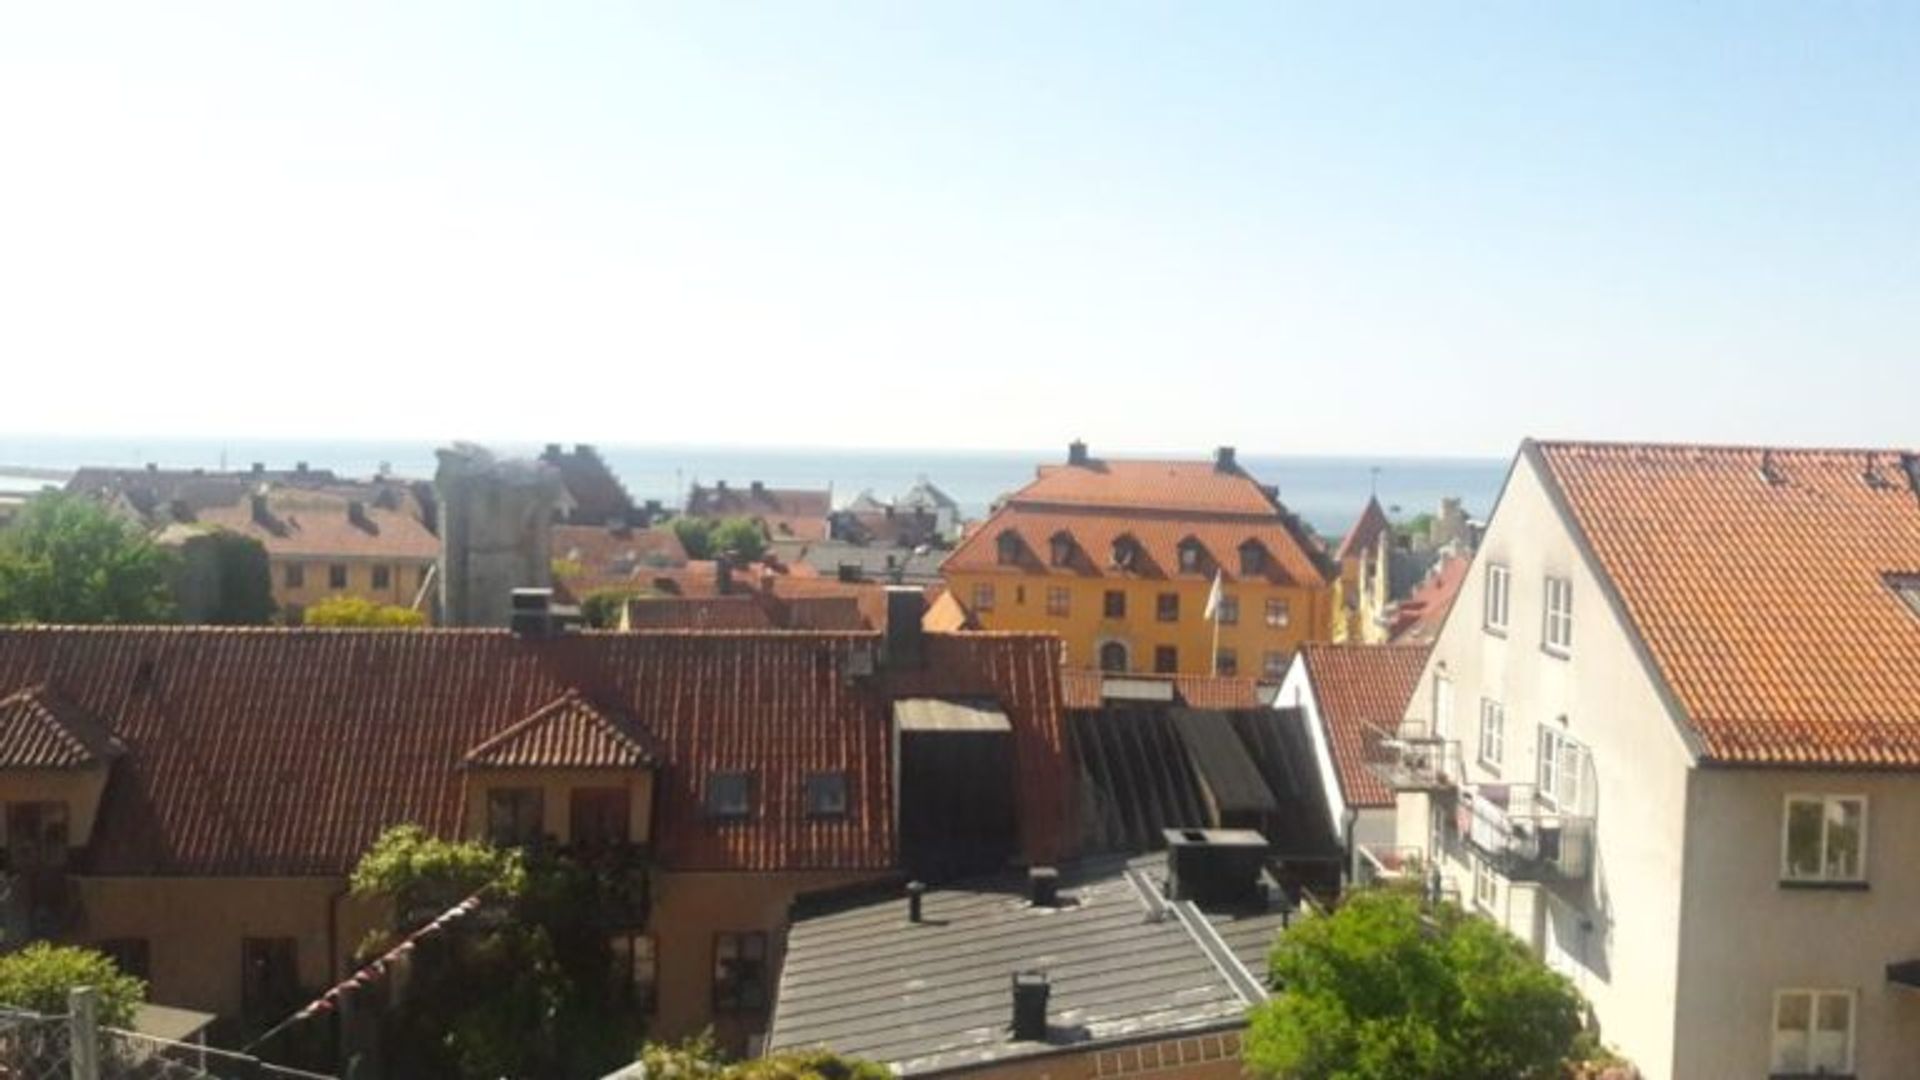 Summer Town: Visby